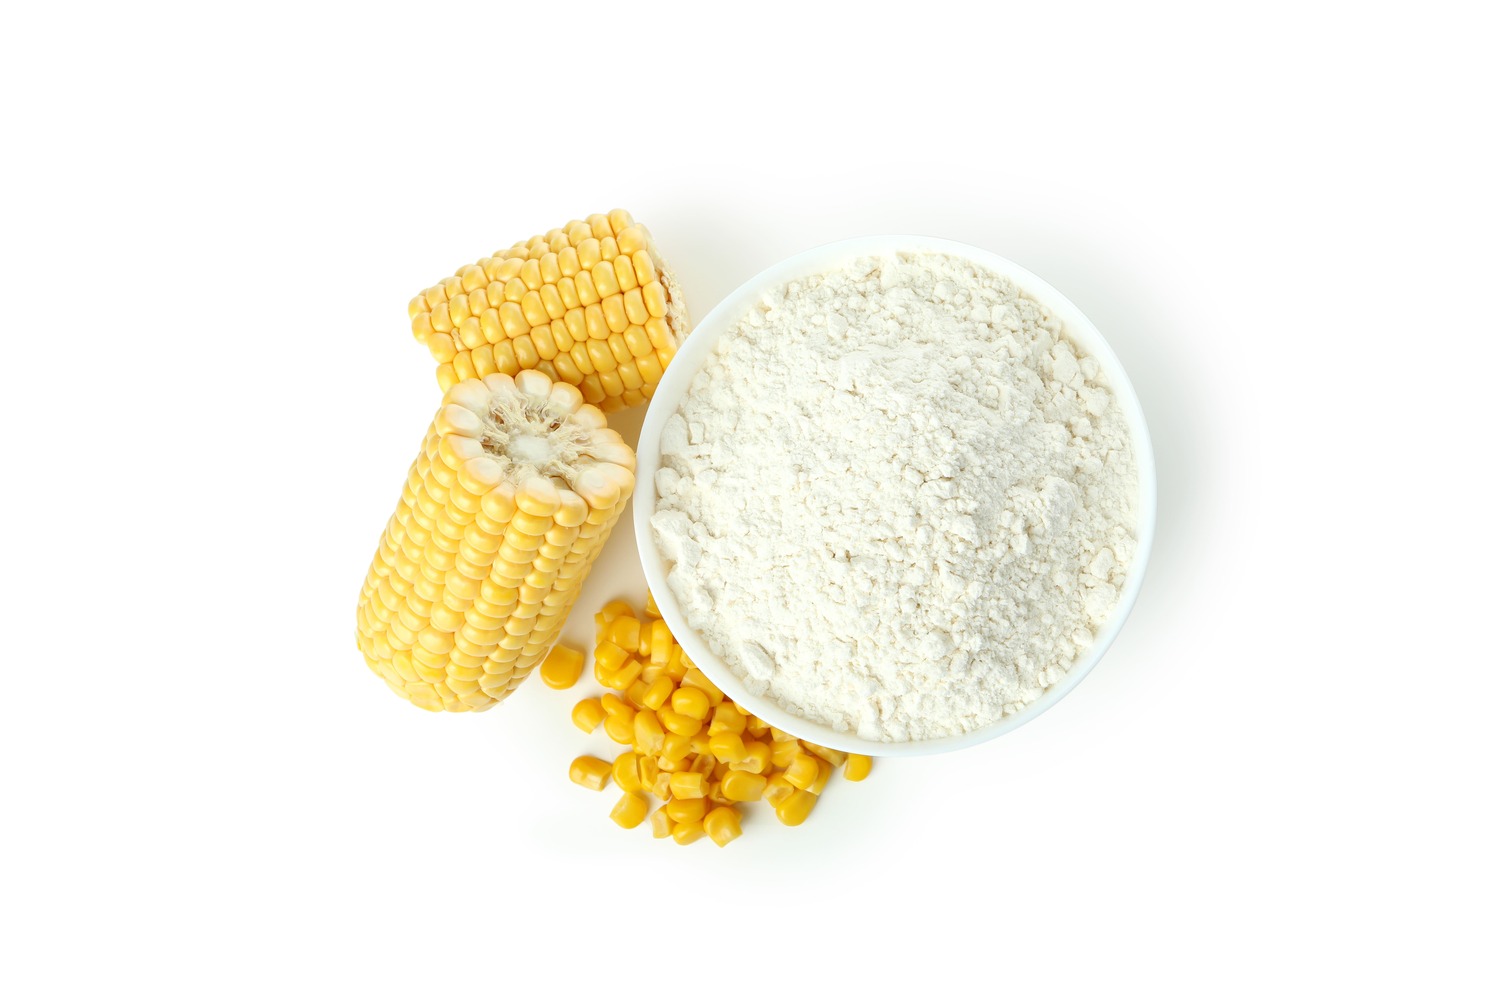 corn-and-flour-isolated-on-white-background-2021-09-04-02-43-17-utc-1-1-1.jpg